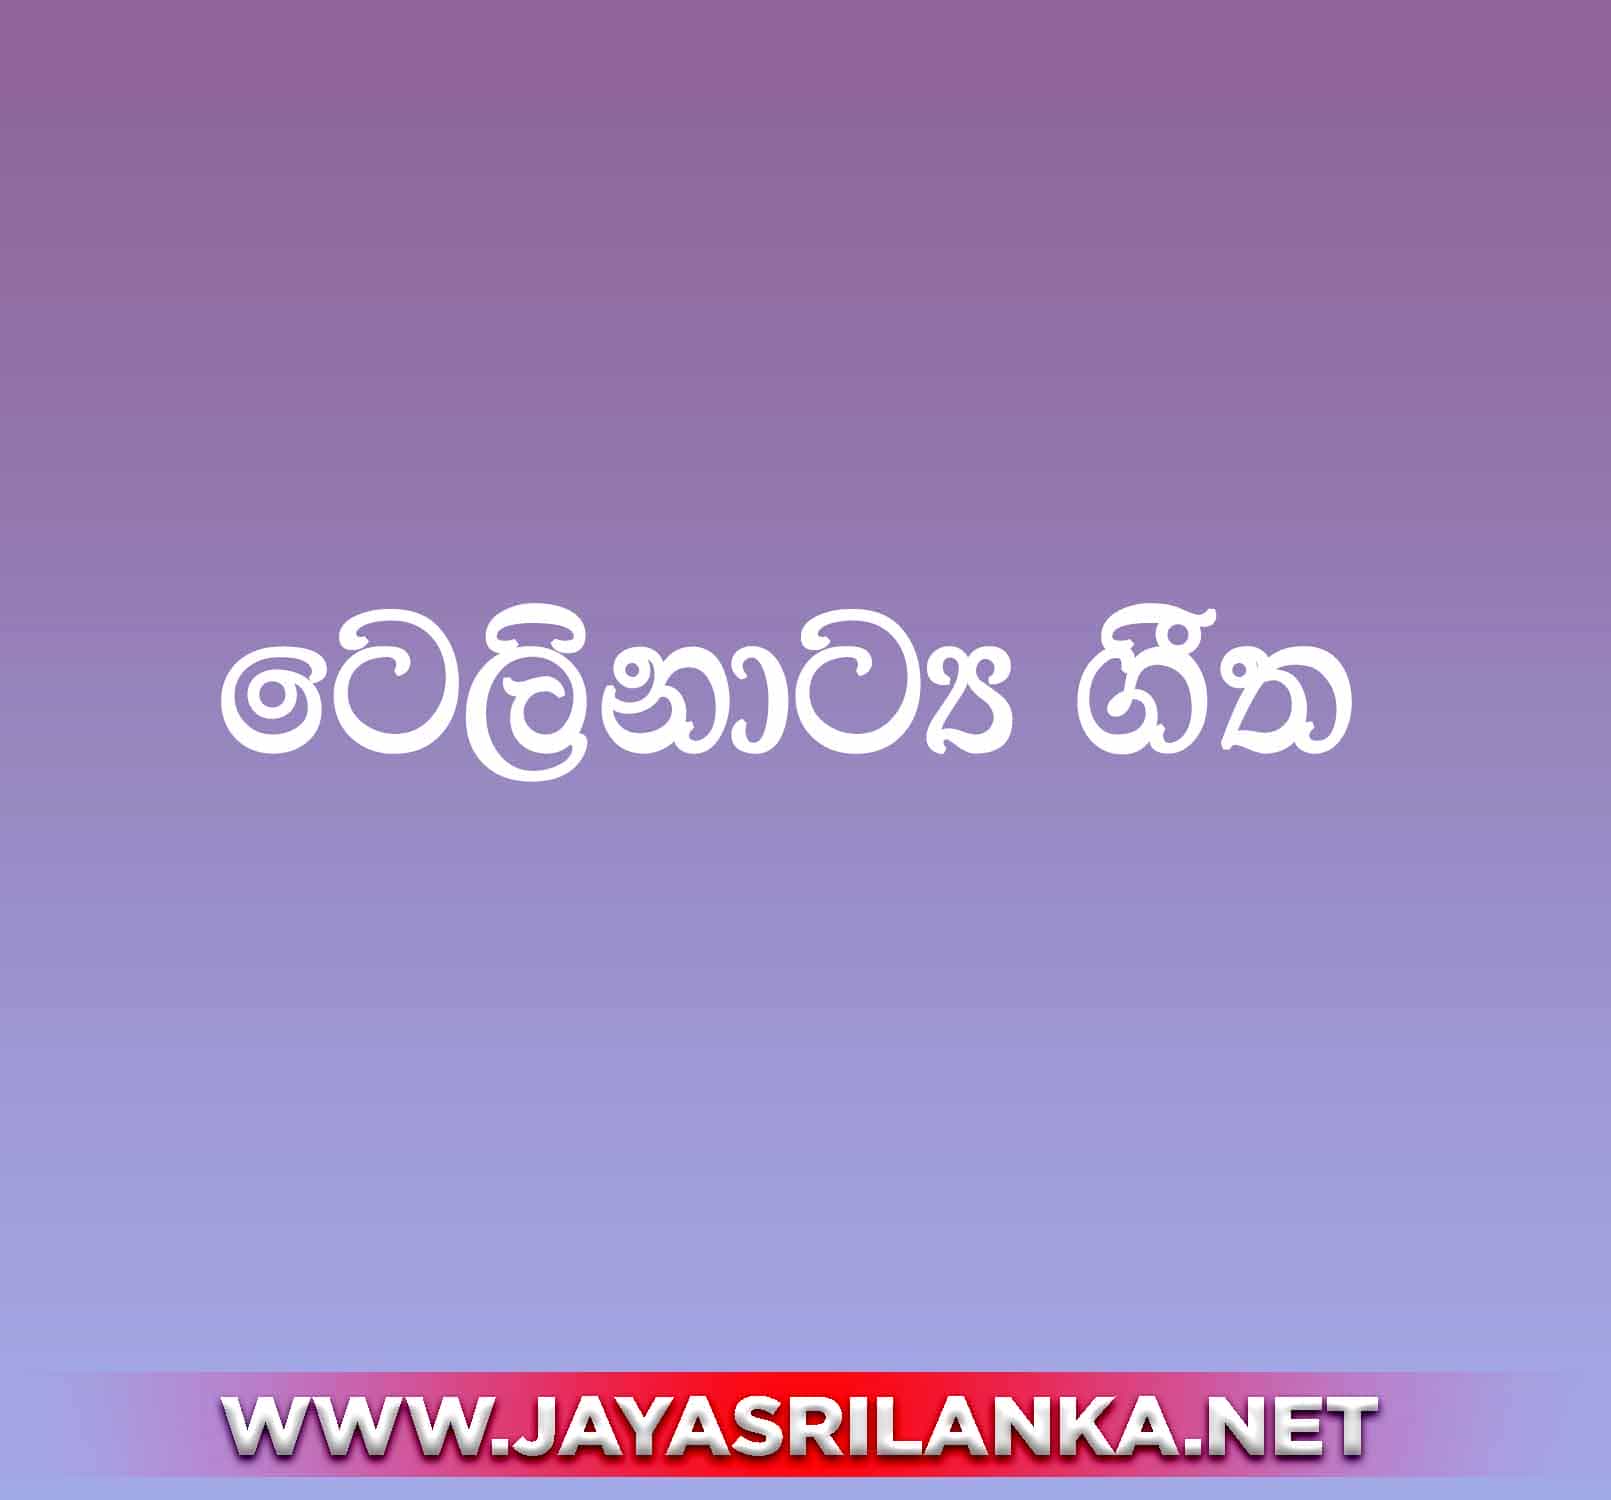 Dasa Perum Pura - Sinhala Teledrama Mp3 Songs mp3 Image